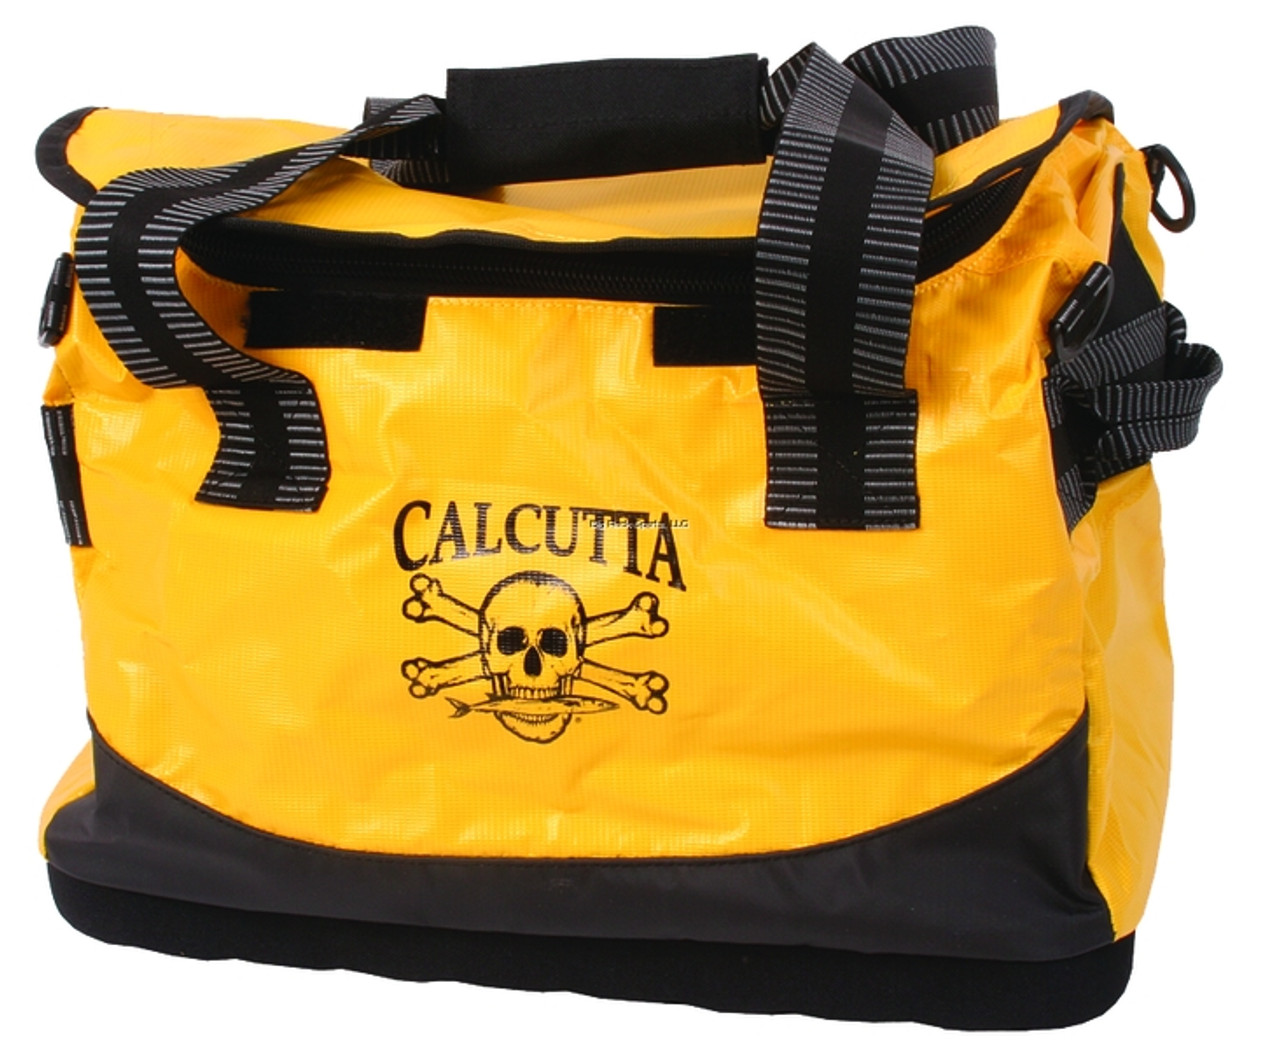 Calcutta Boat Bag